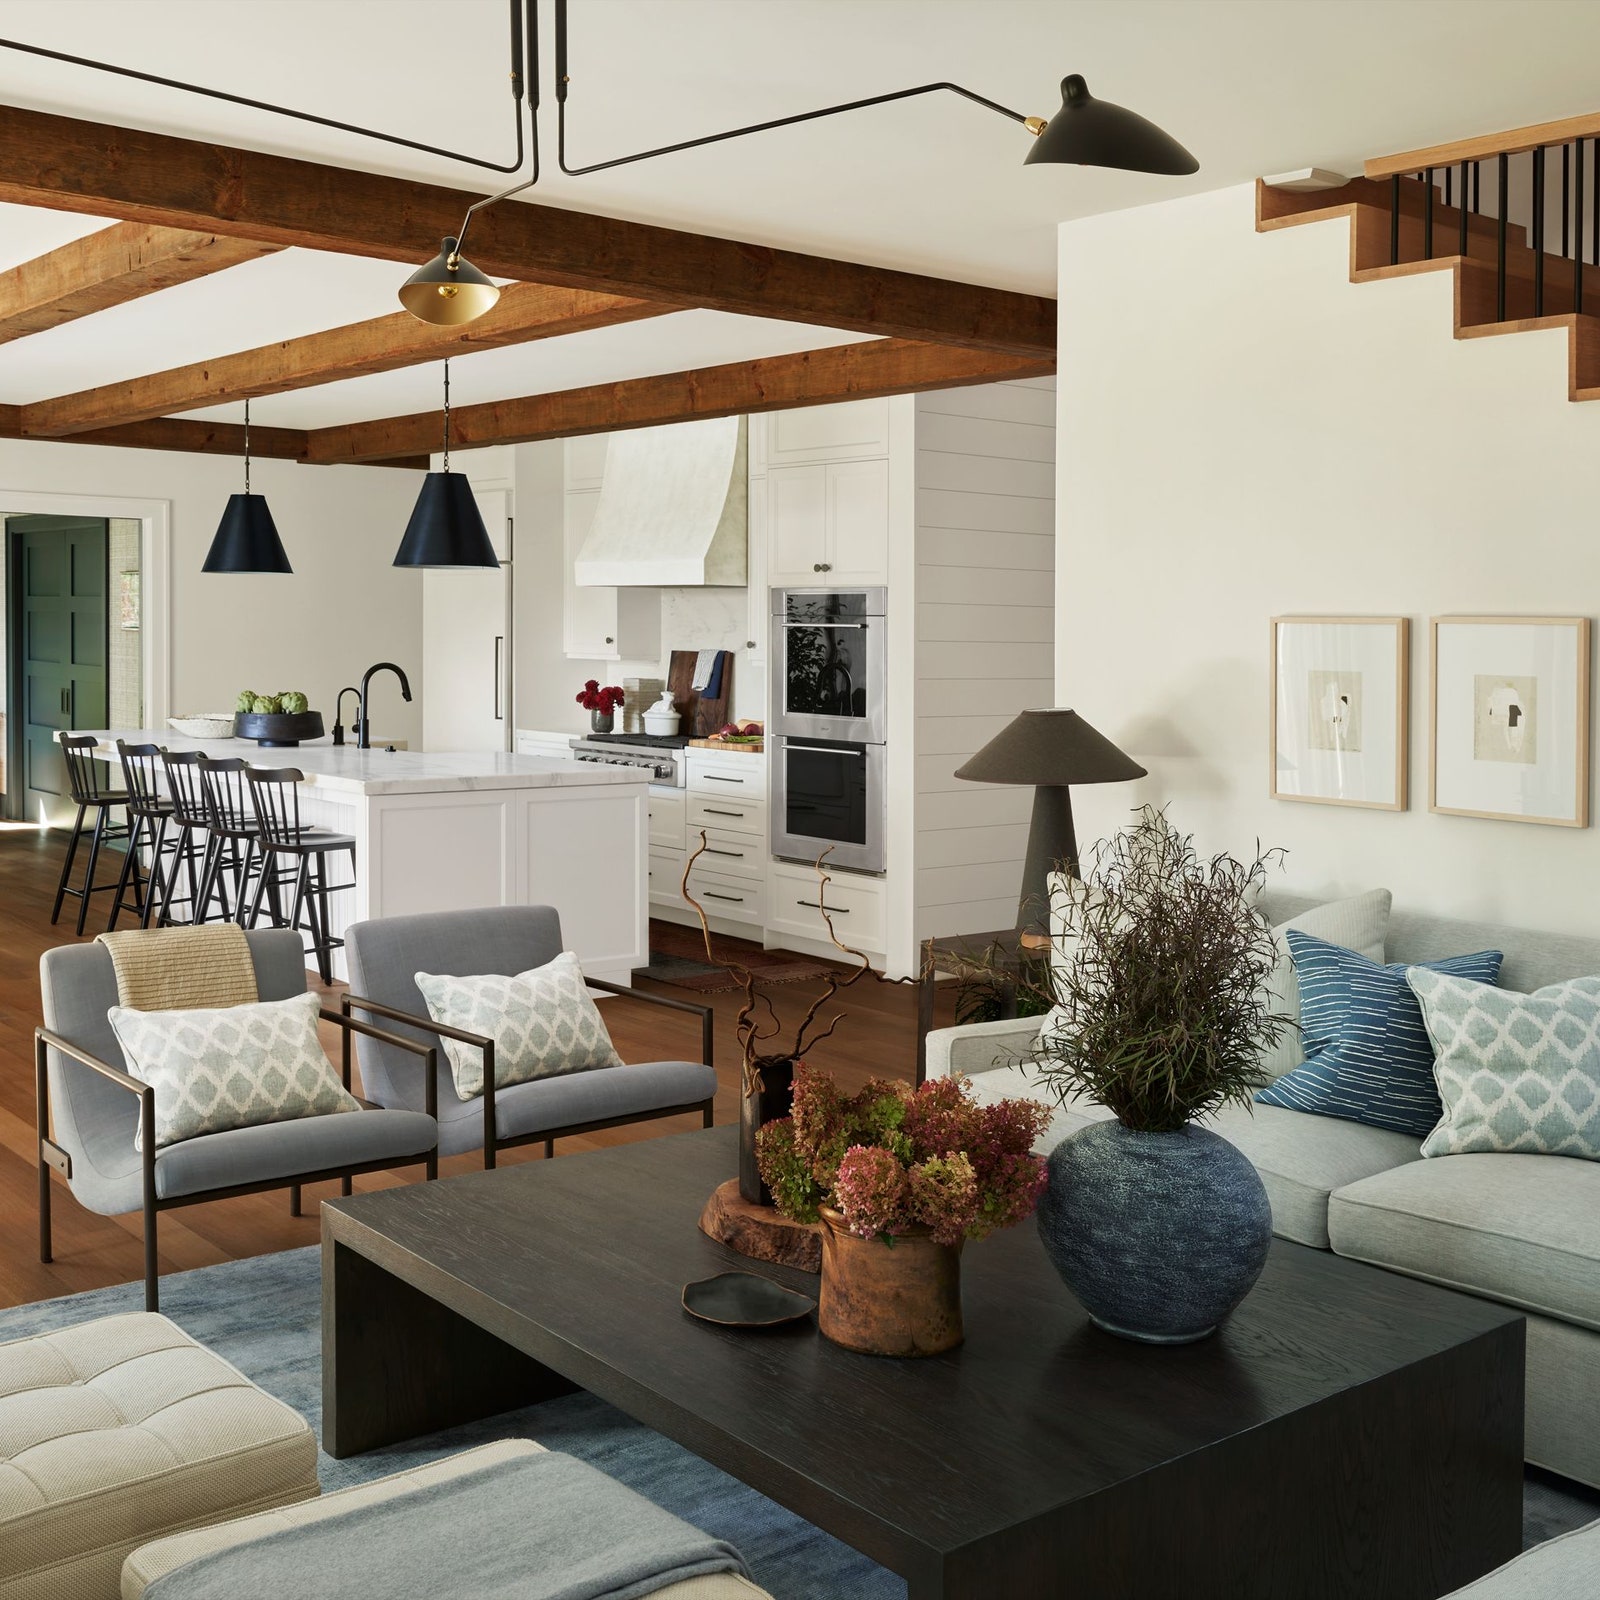 15 Farmhouse Living Room Ideas for Cozy, Laid-Back Hangouts